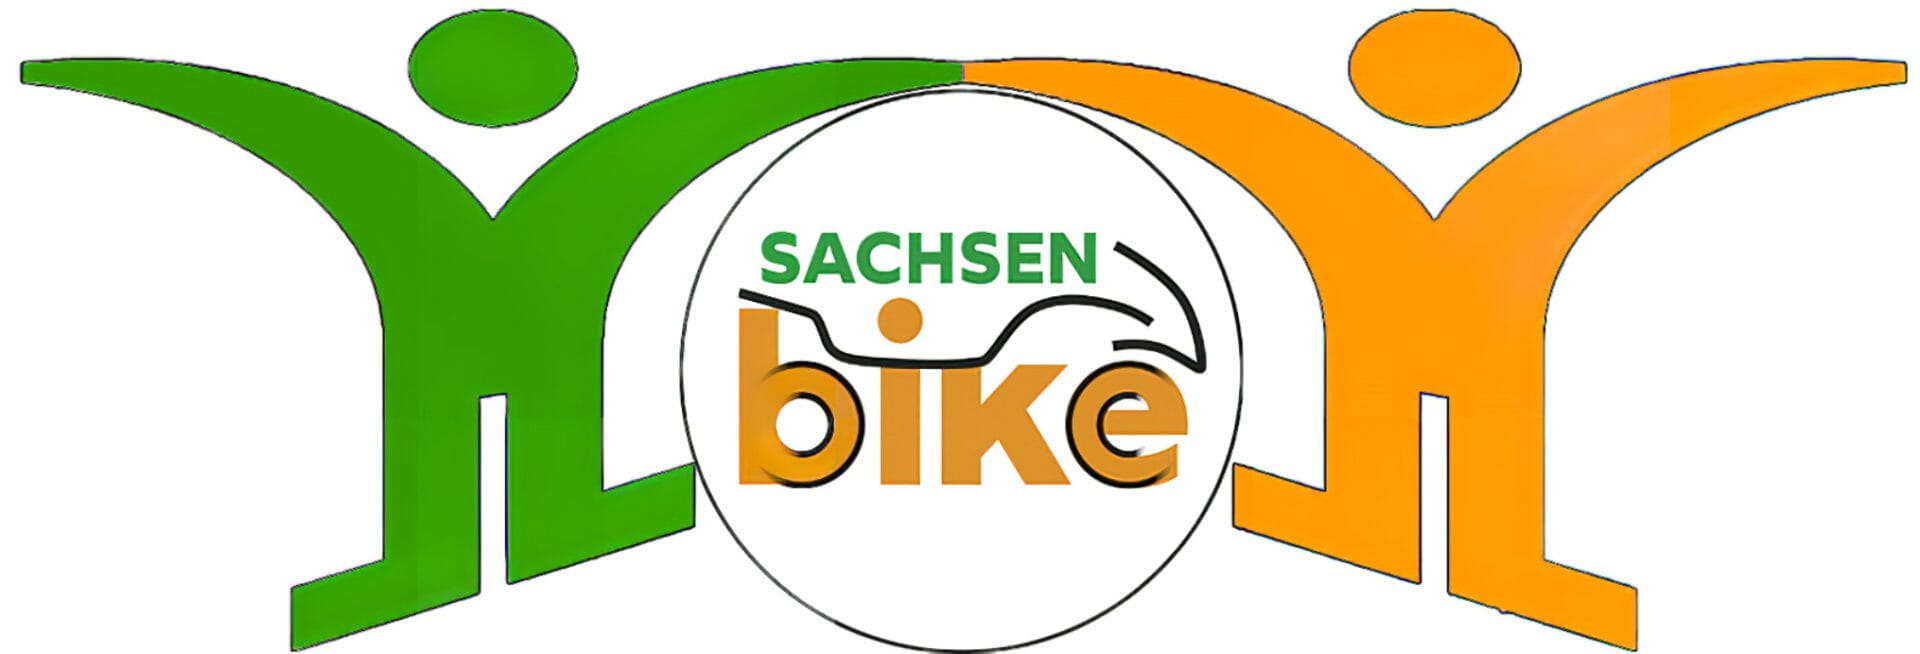 Sachsenbike-Heimkinderausfahrt - MOTORCYCLES.NEWS